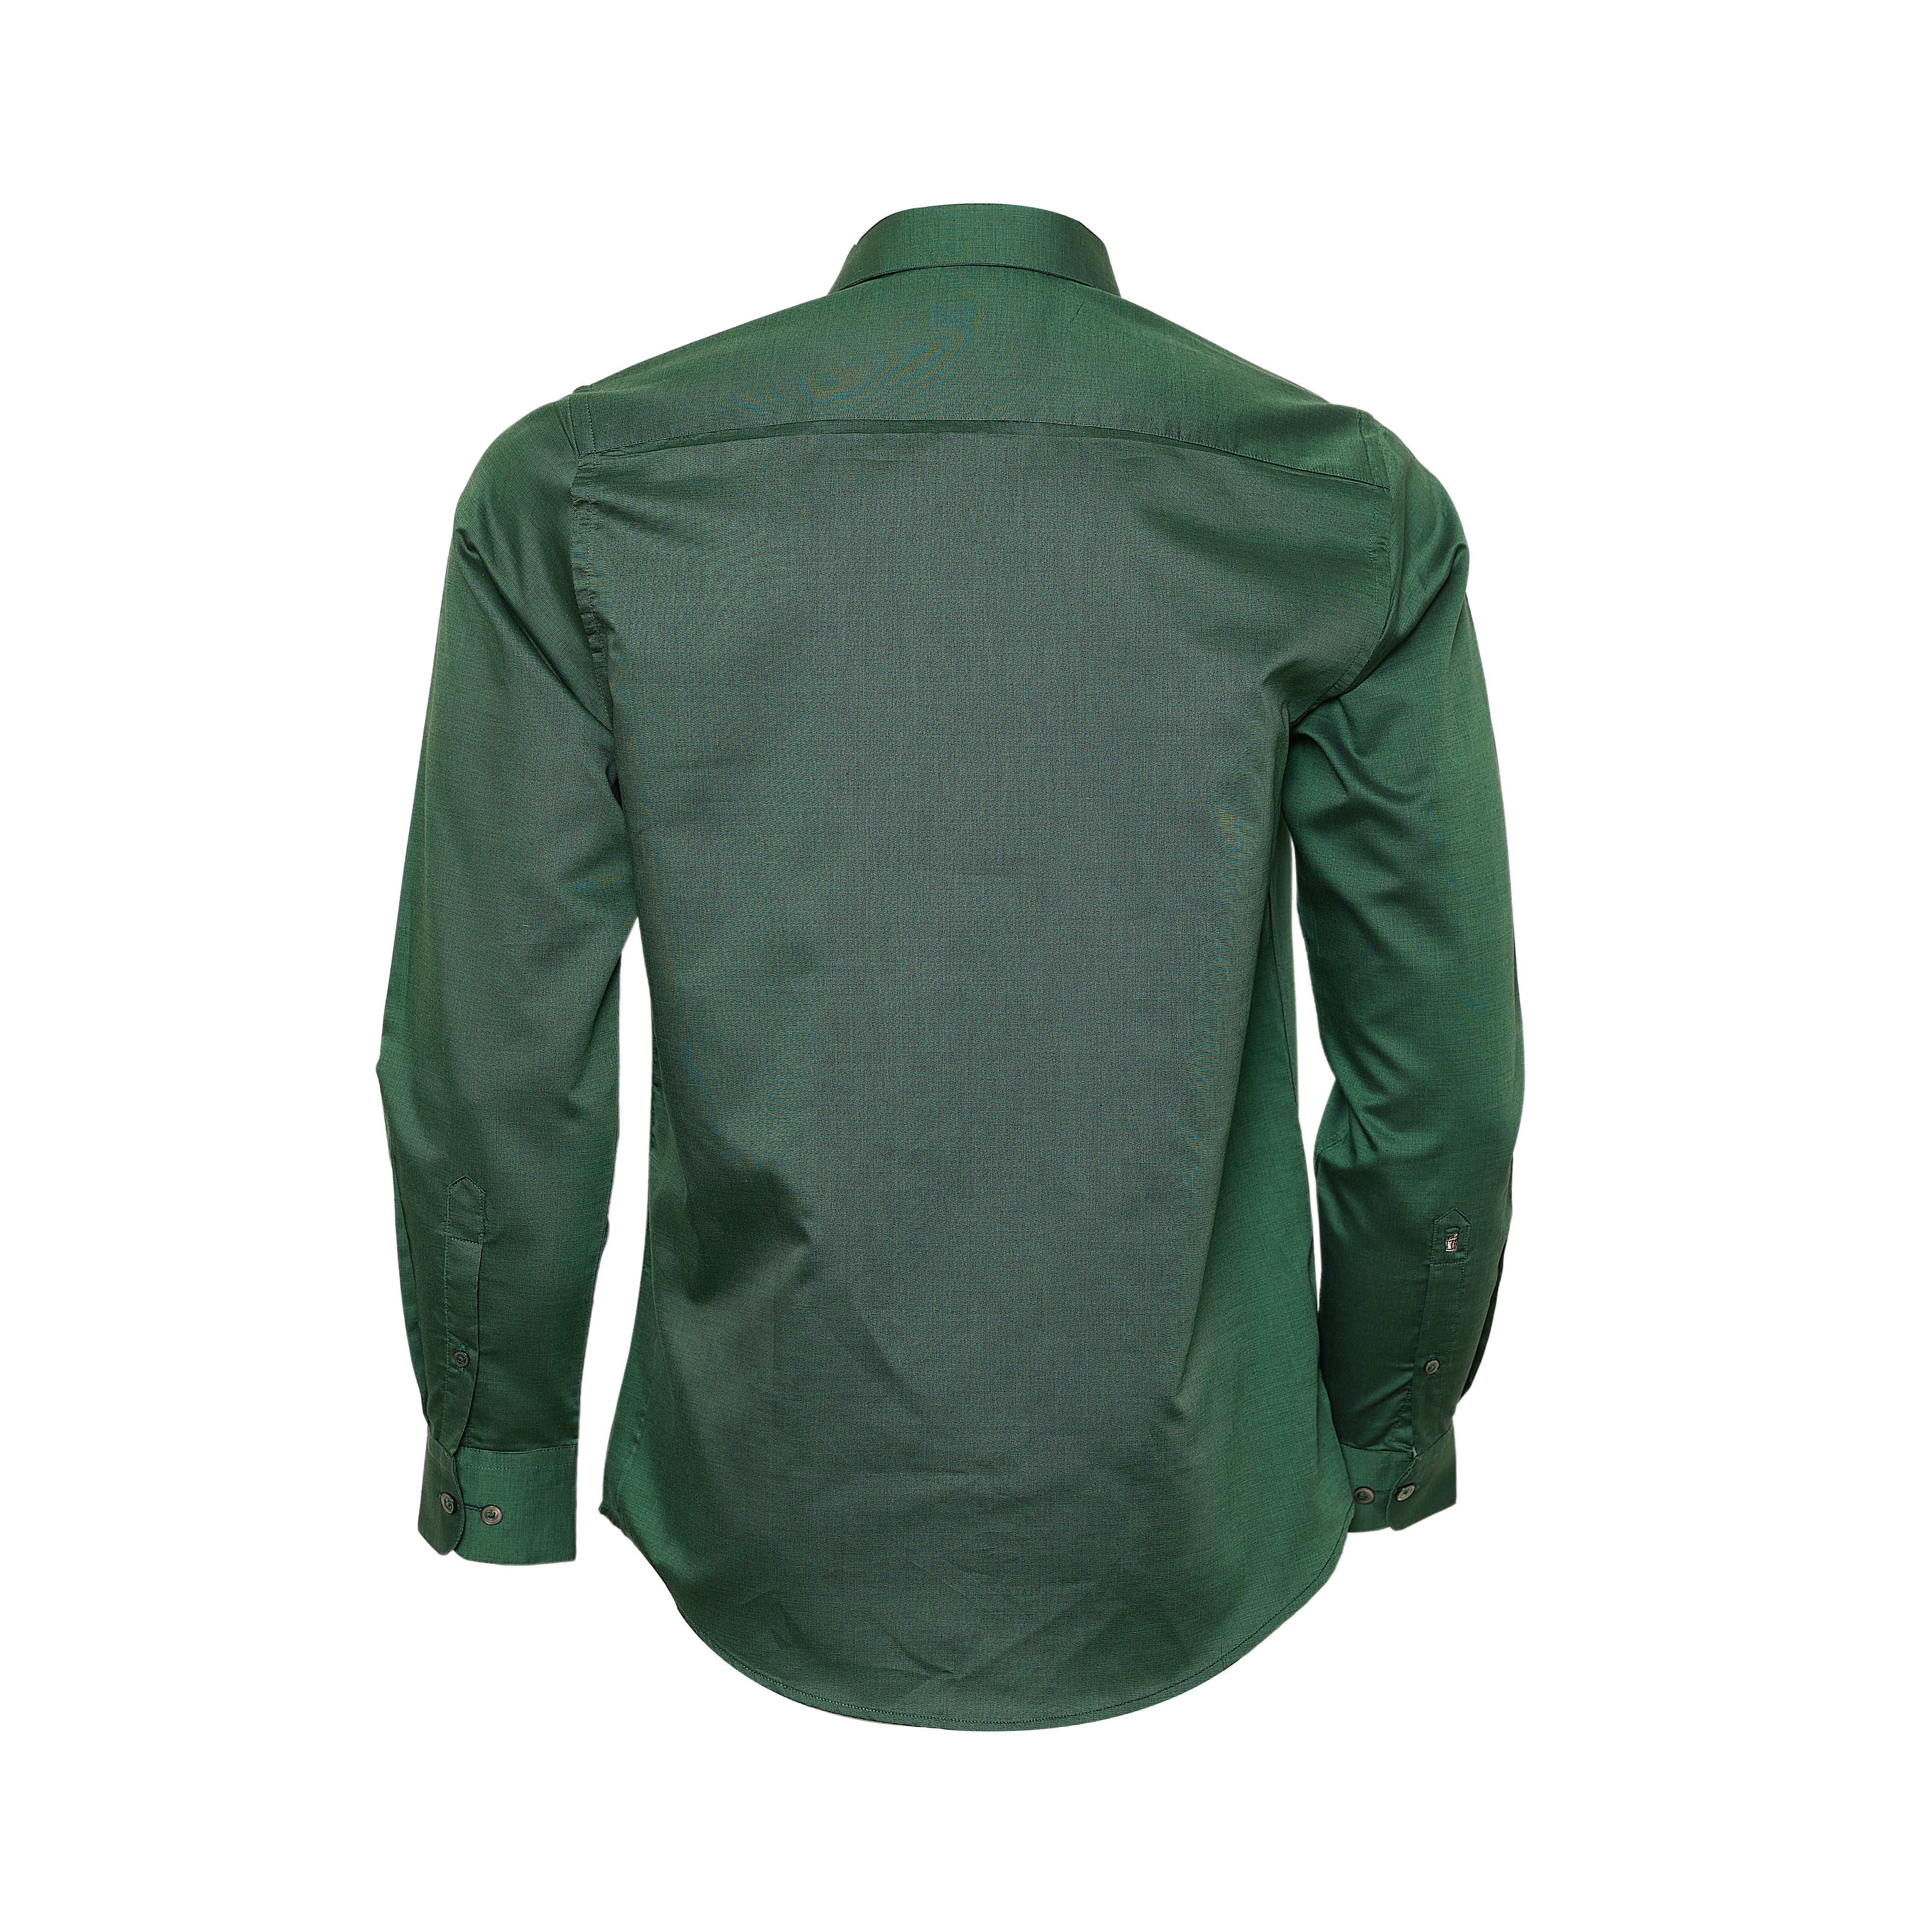 Superfine Supima Cotton, Dark Green Full-sleeved shirt